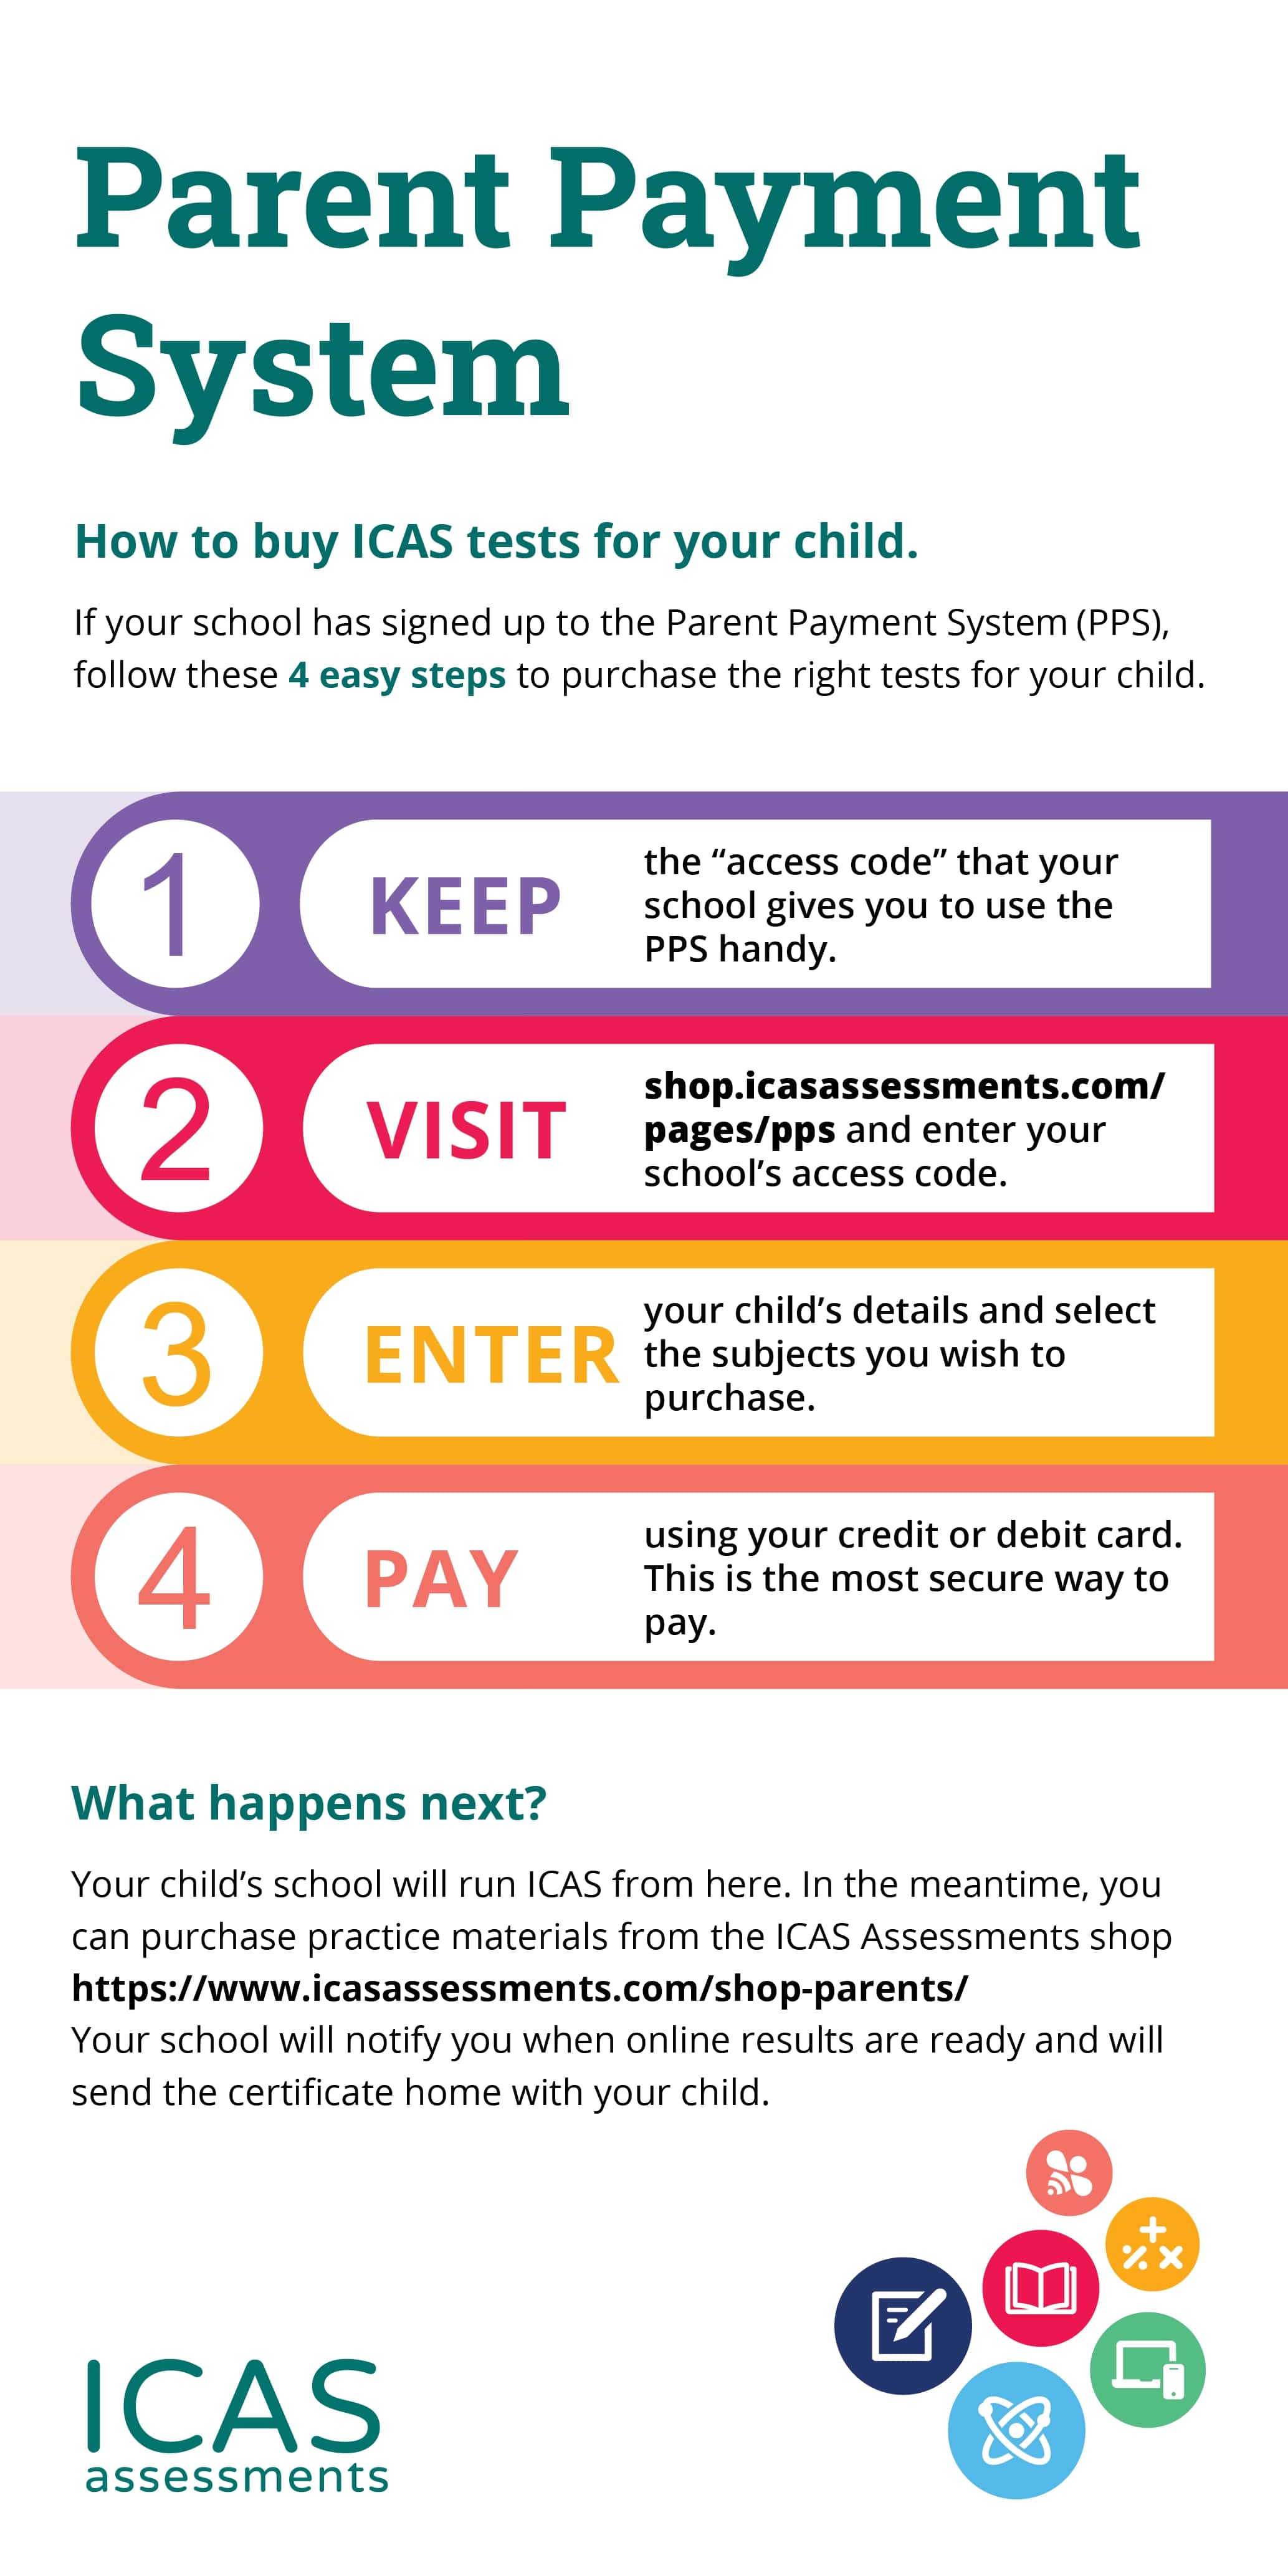 Parent Payment System Quick Guide Instructions